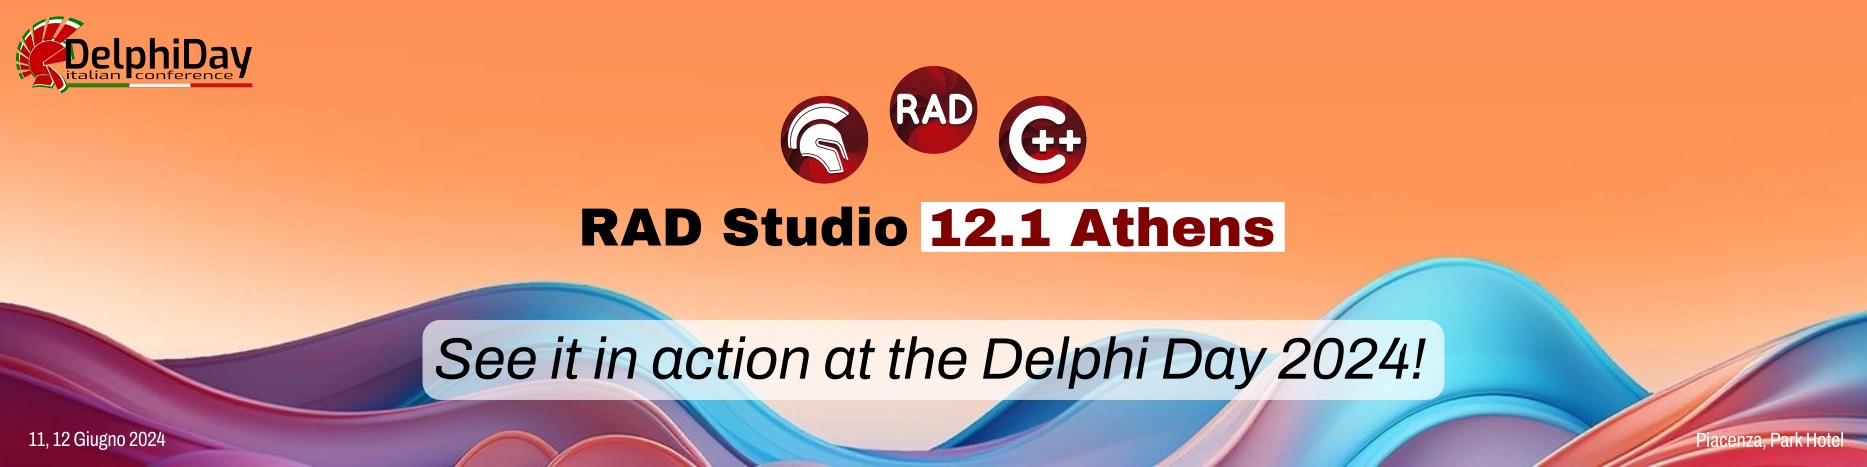 RAD Studio 12.1